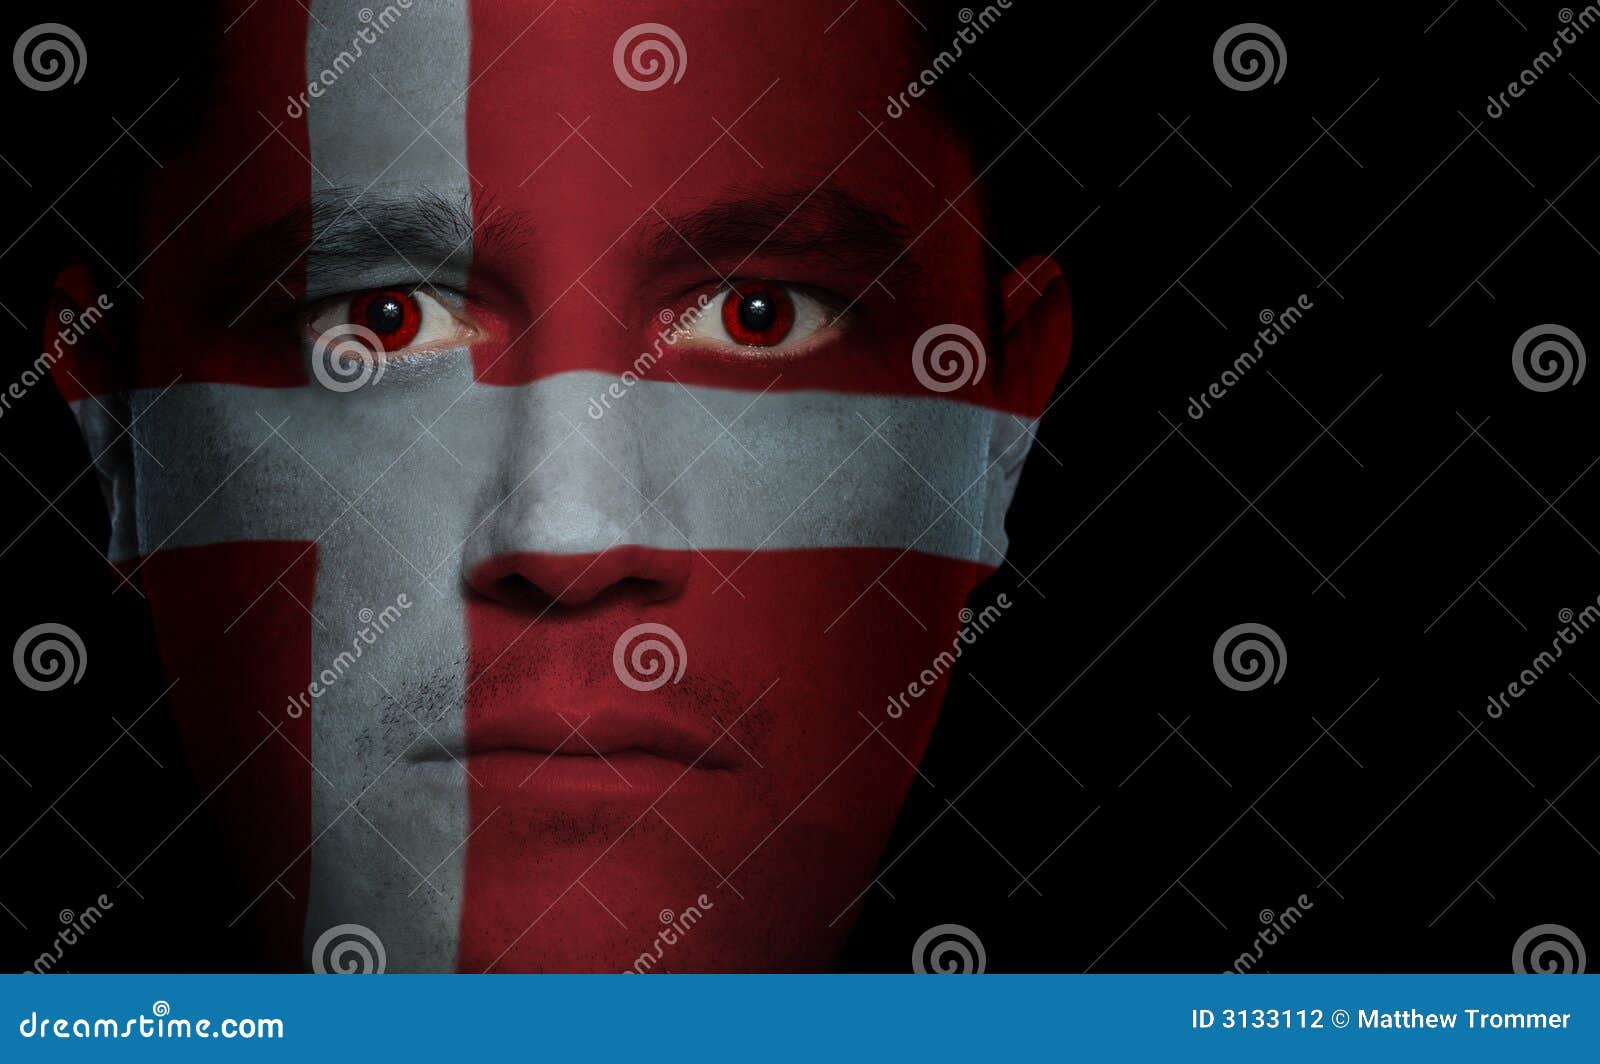 danish flag - male face